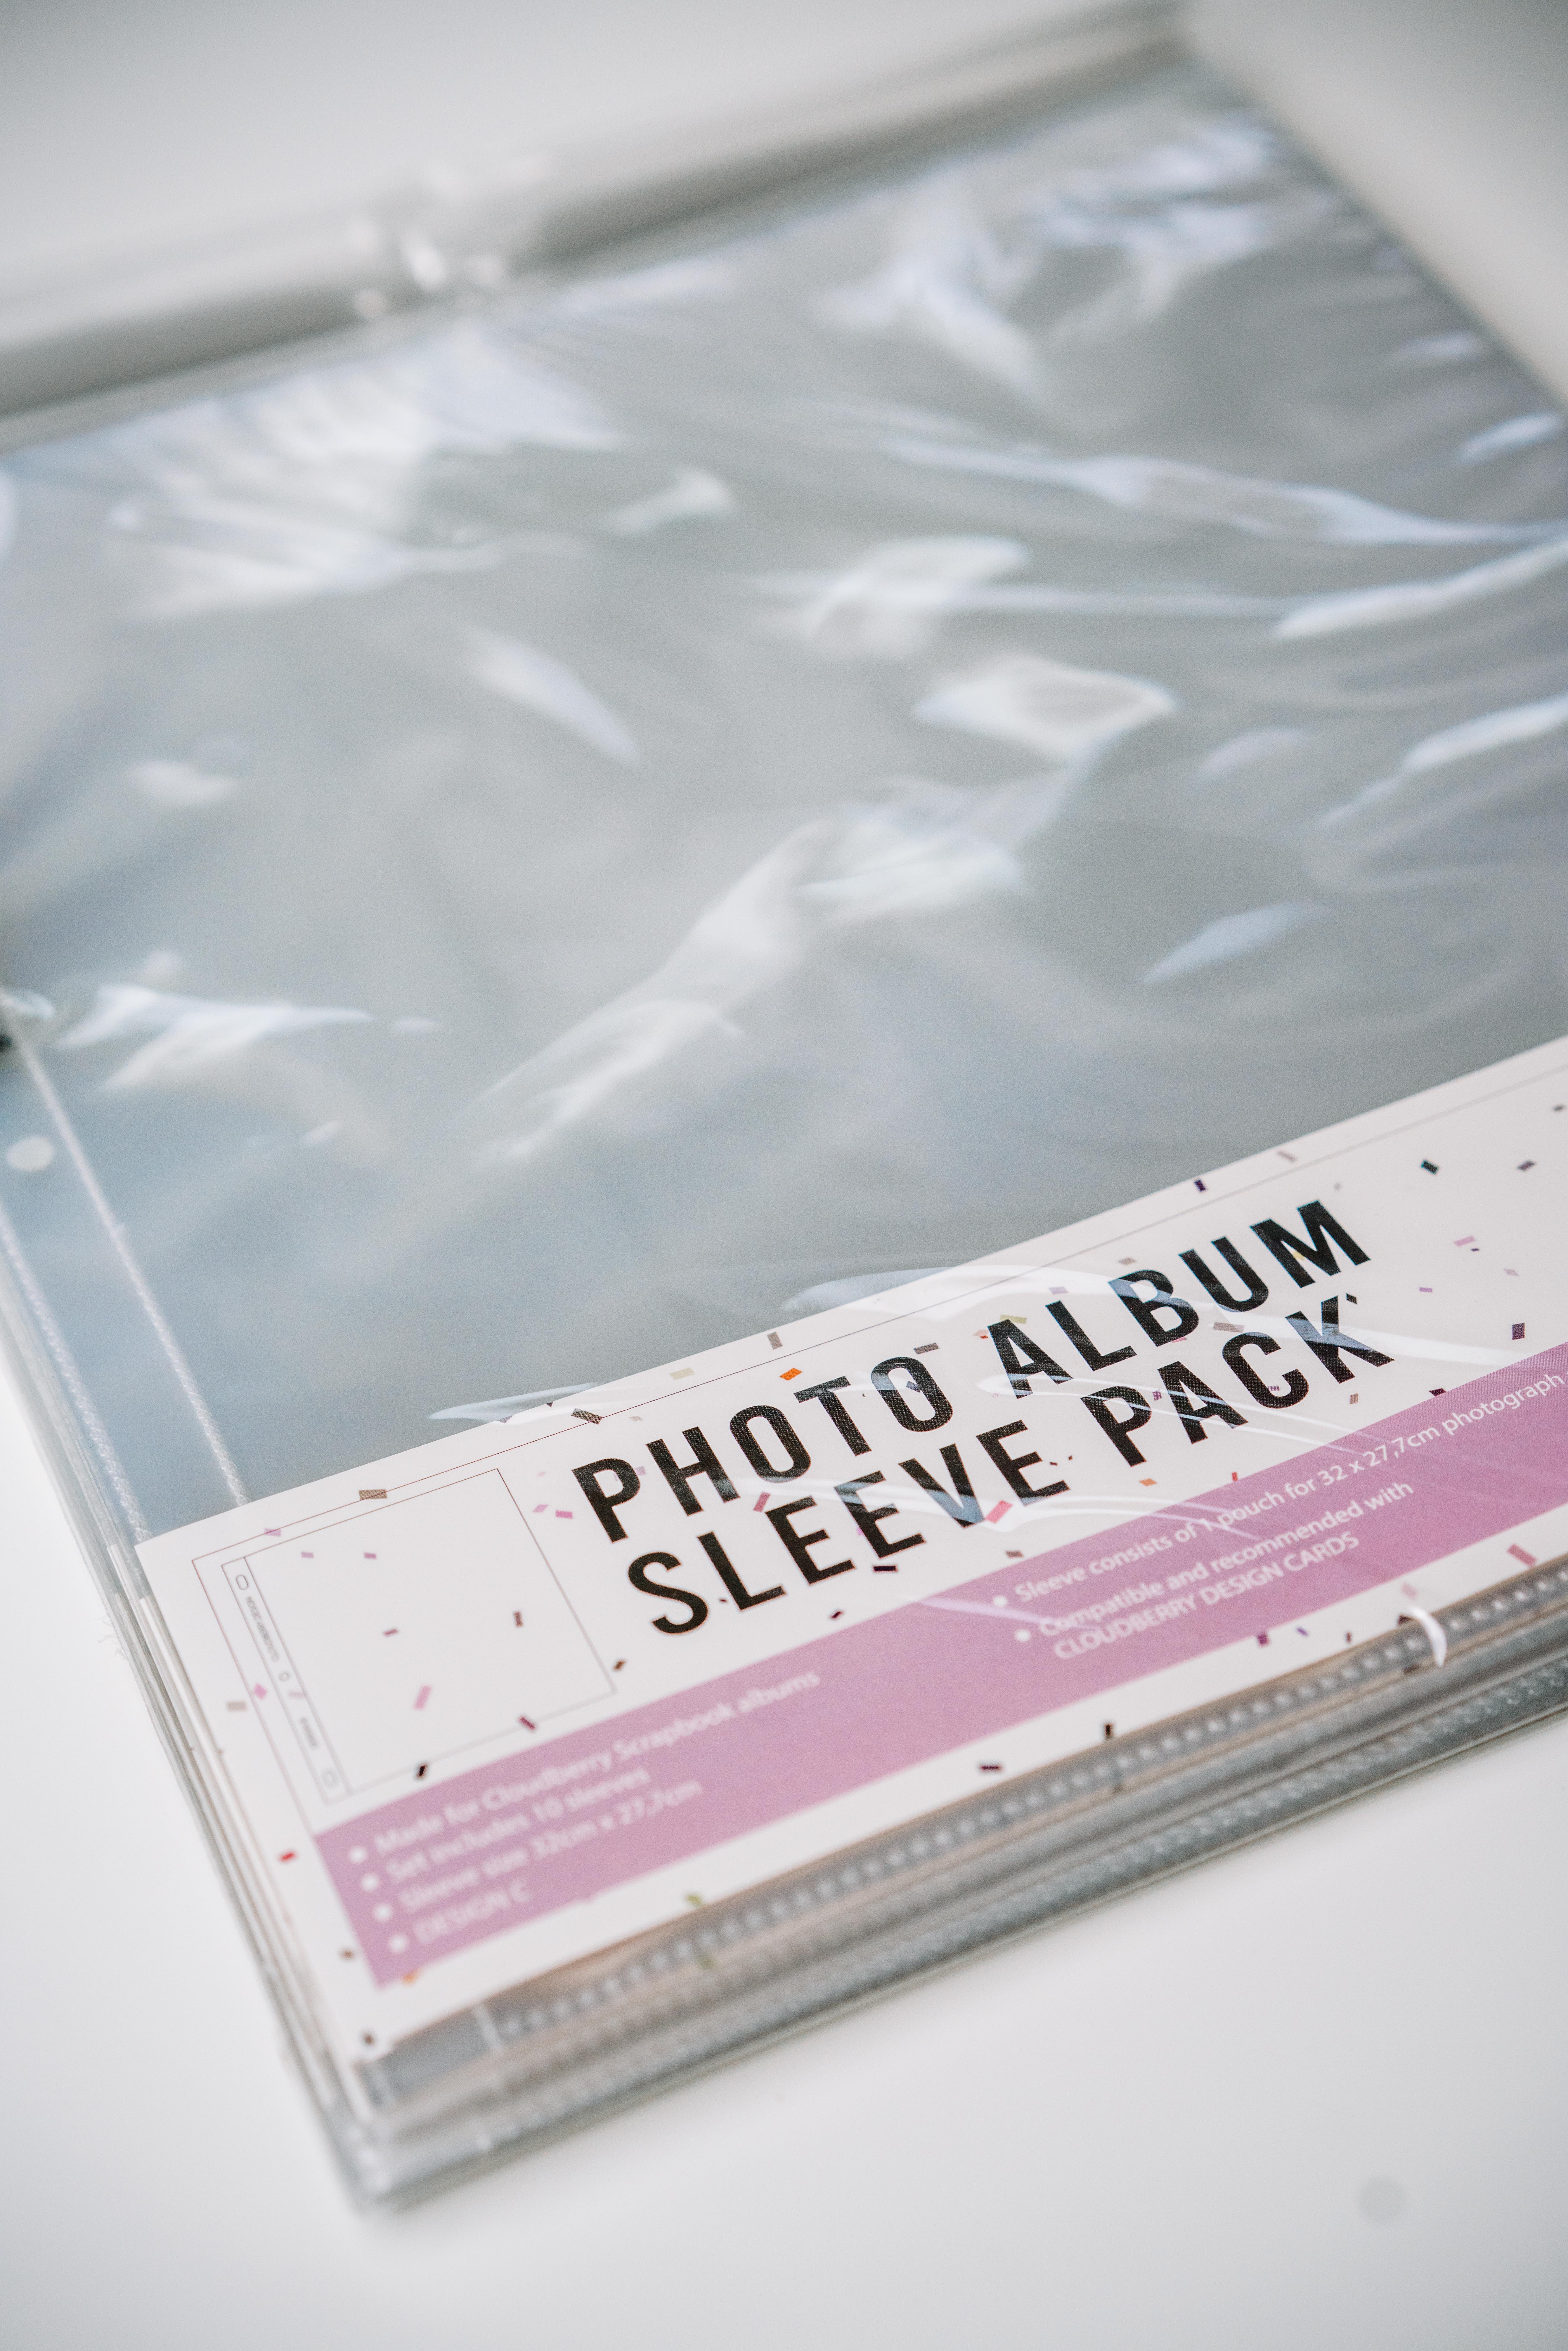 Scrapbook Album With Plastic Sleeves 